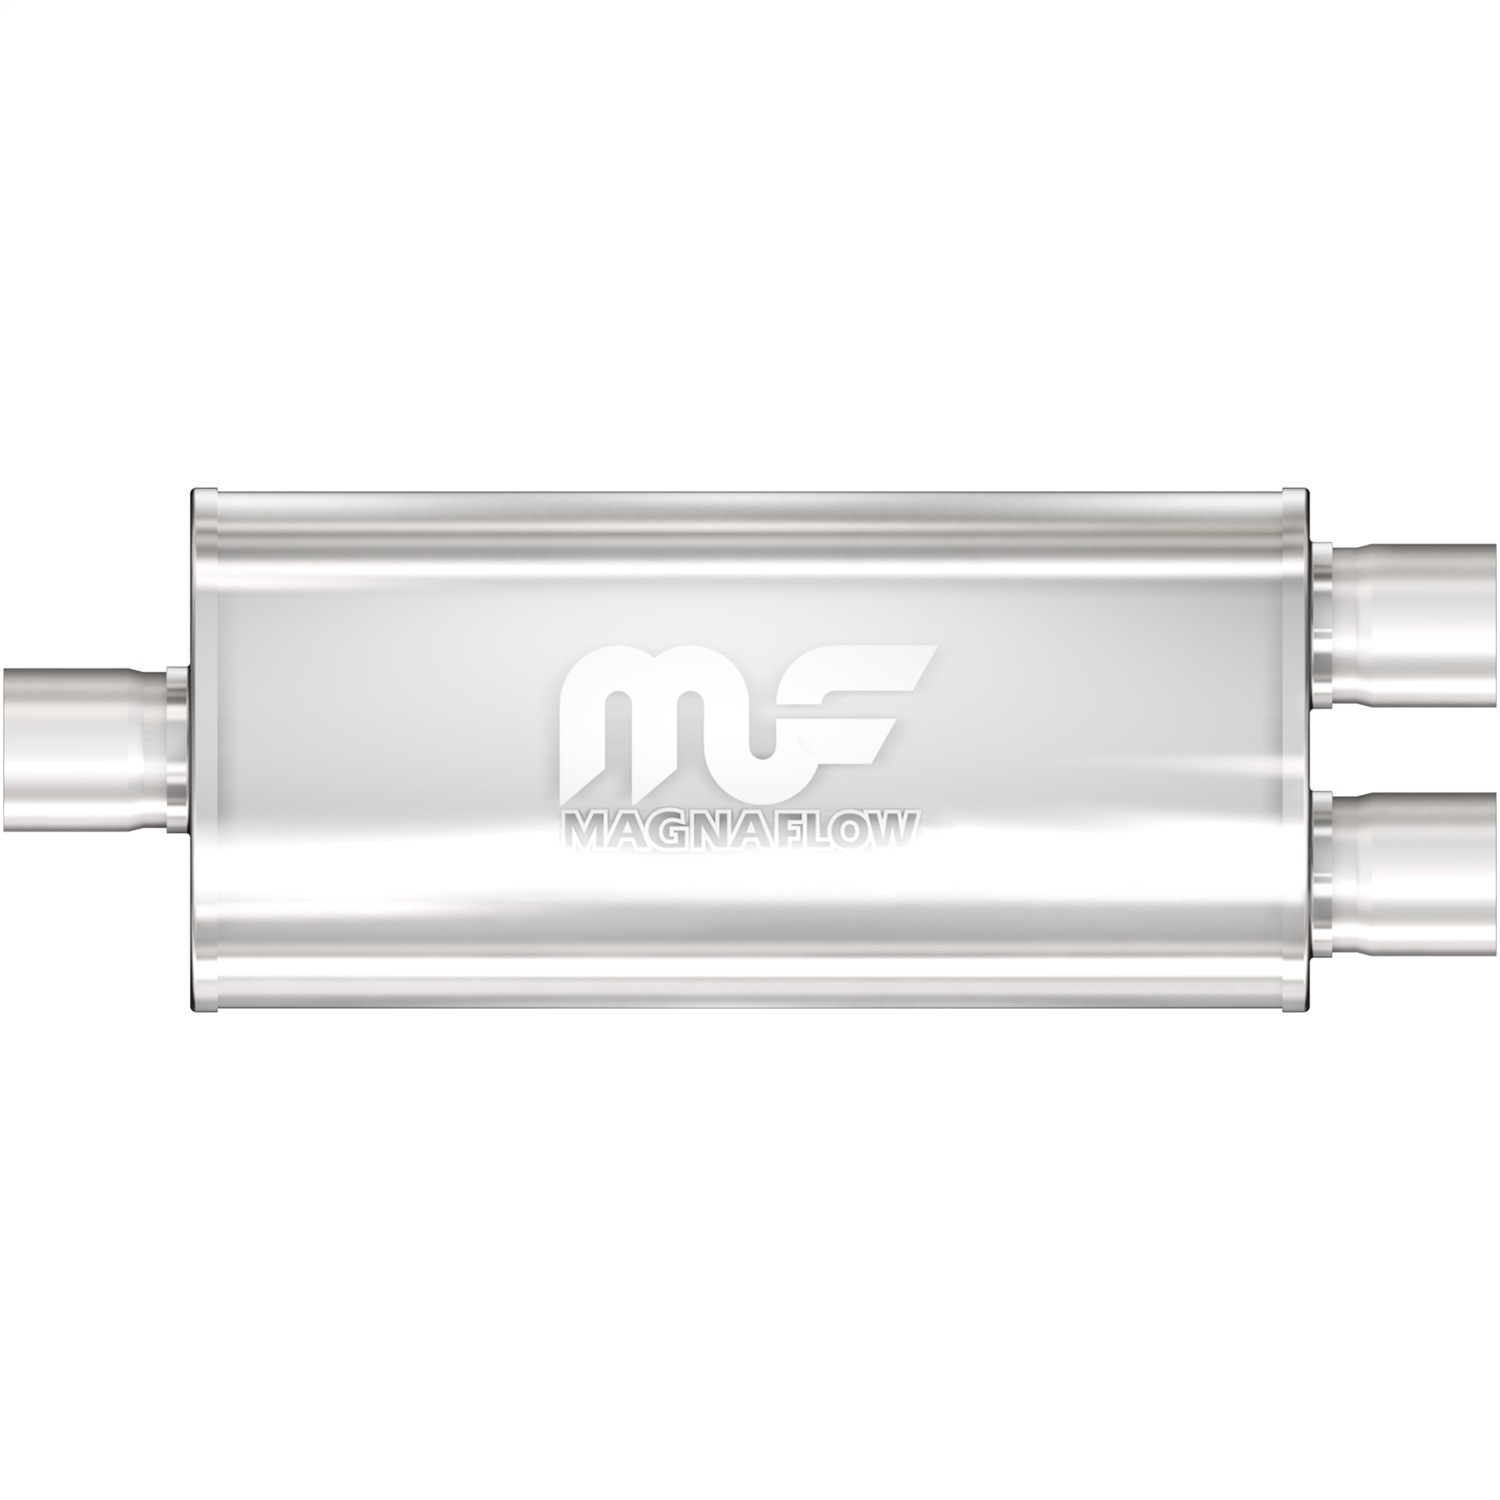 Magnaflow Performance Exhaust Magnaflow Performance Exhaust 12298 Stainless Steel Muffler